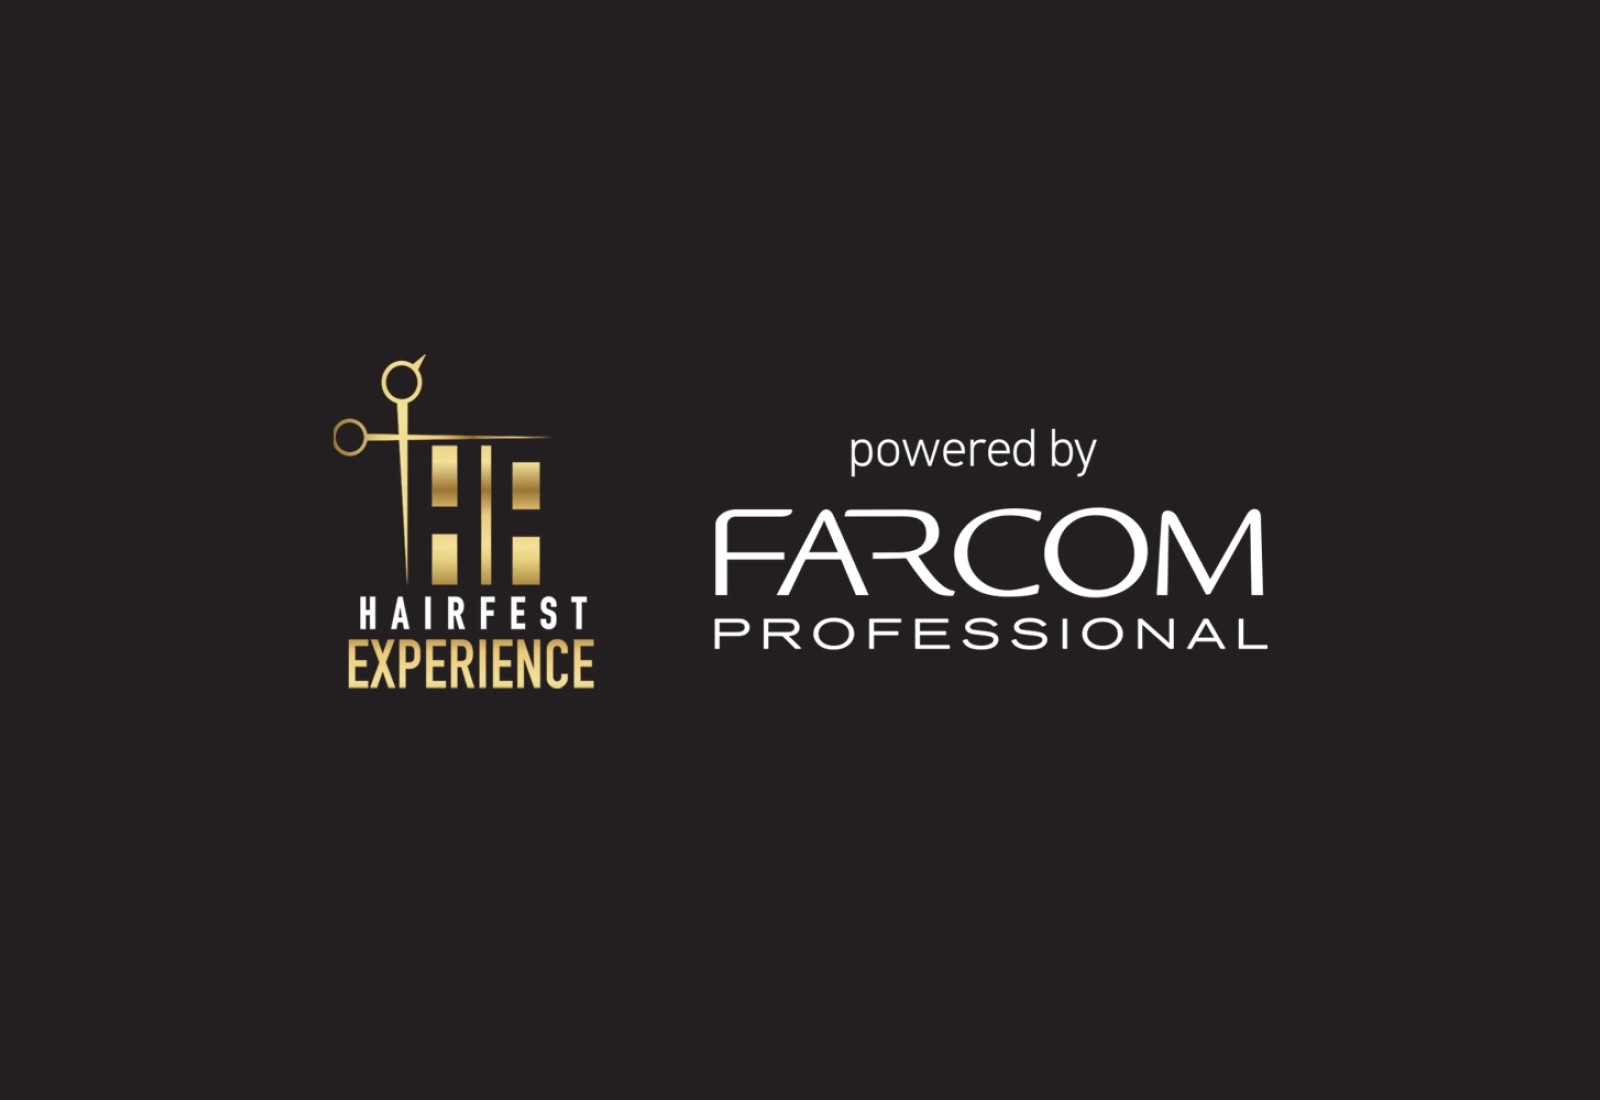 Farcom Professional, grand sponsor of the Hairfest Exeperience